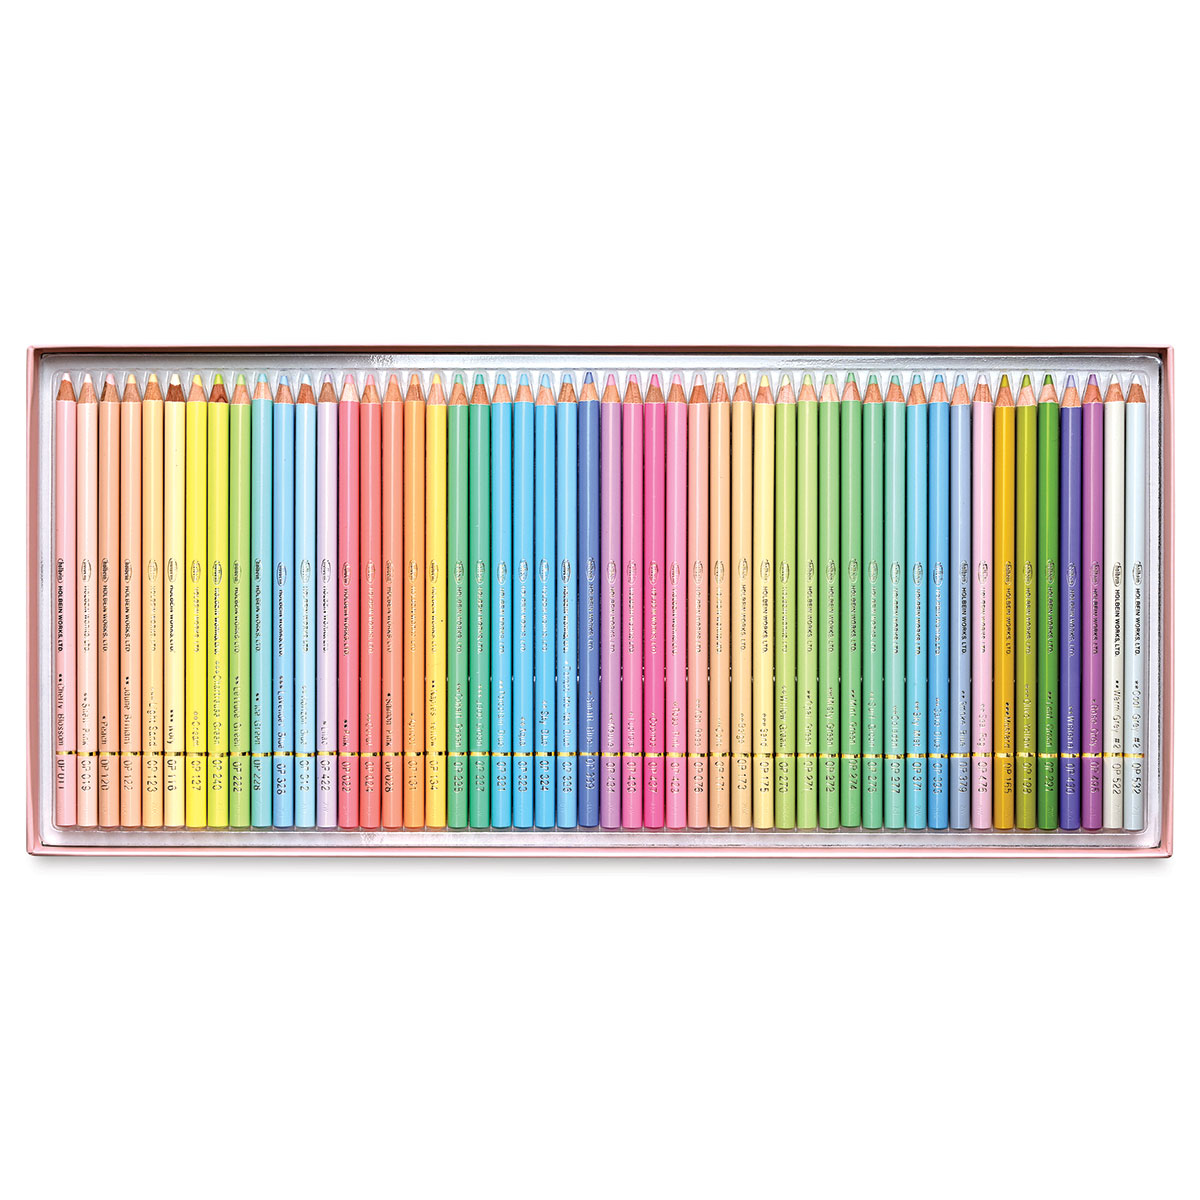 HOLBAIN Artist Colored Pencils Set of 100 OP940